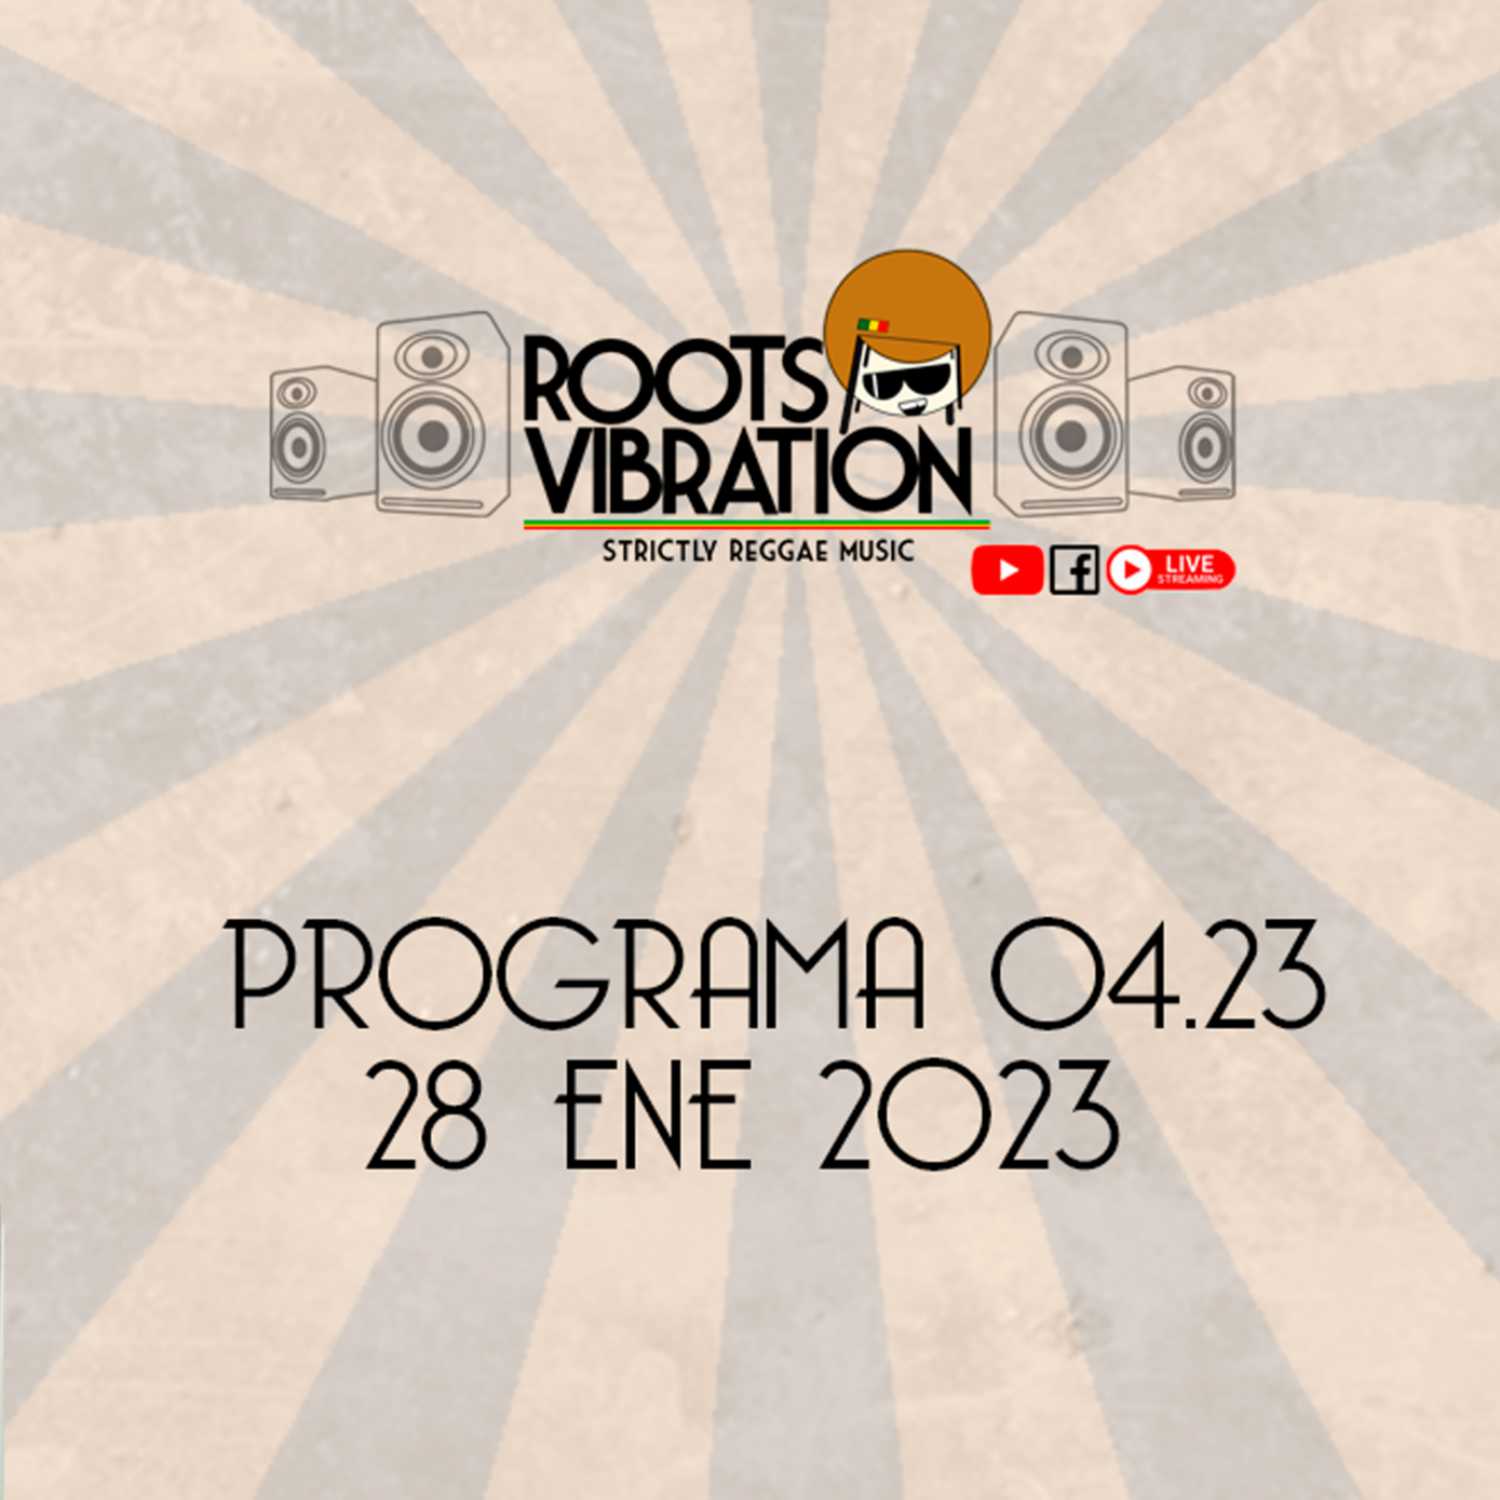 Programa 04.2023 ROOTS VIBRATION